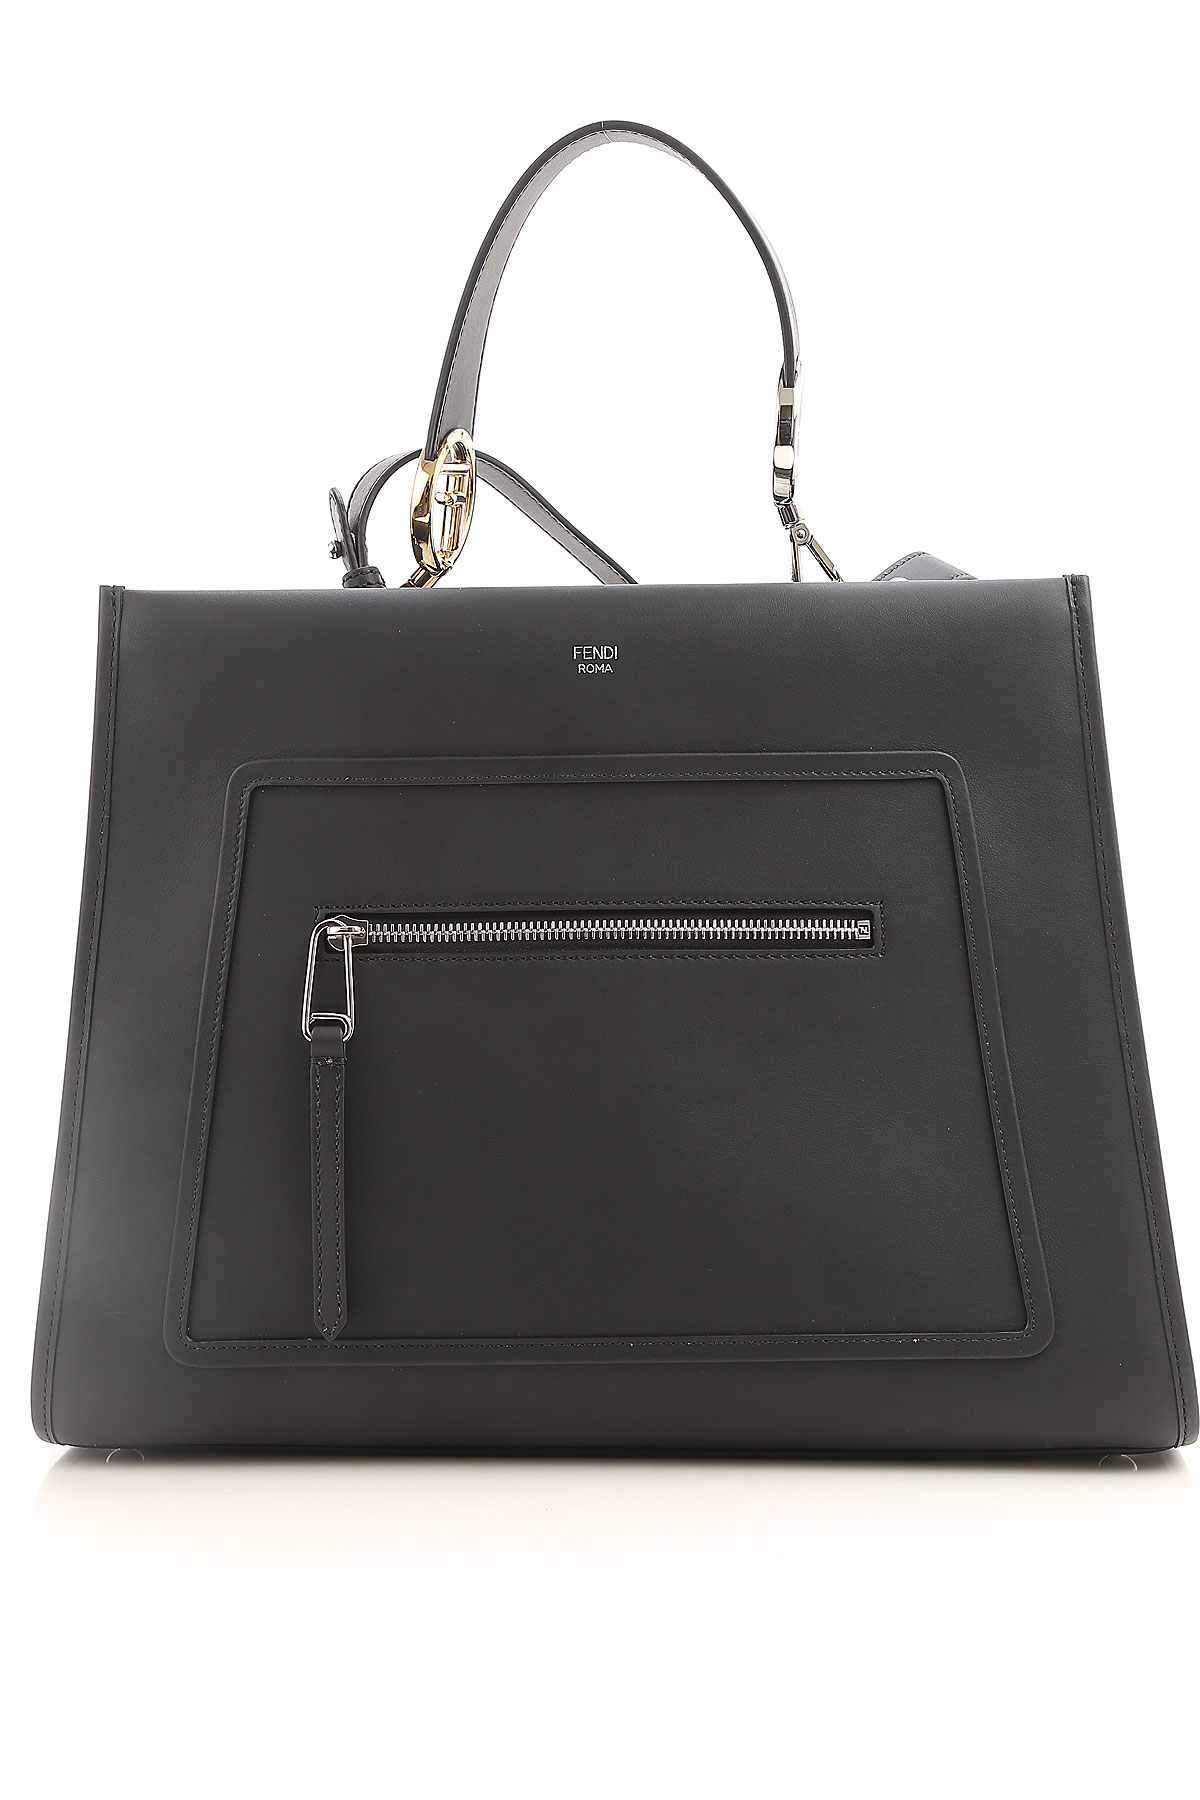 Handbags Fendi, Style code: 8bh343-2ih-f0gxn